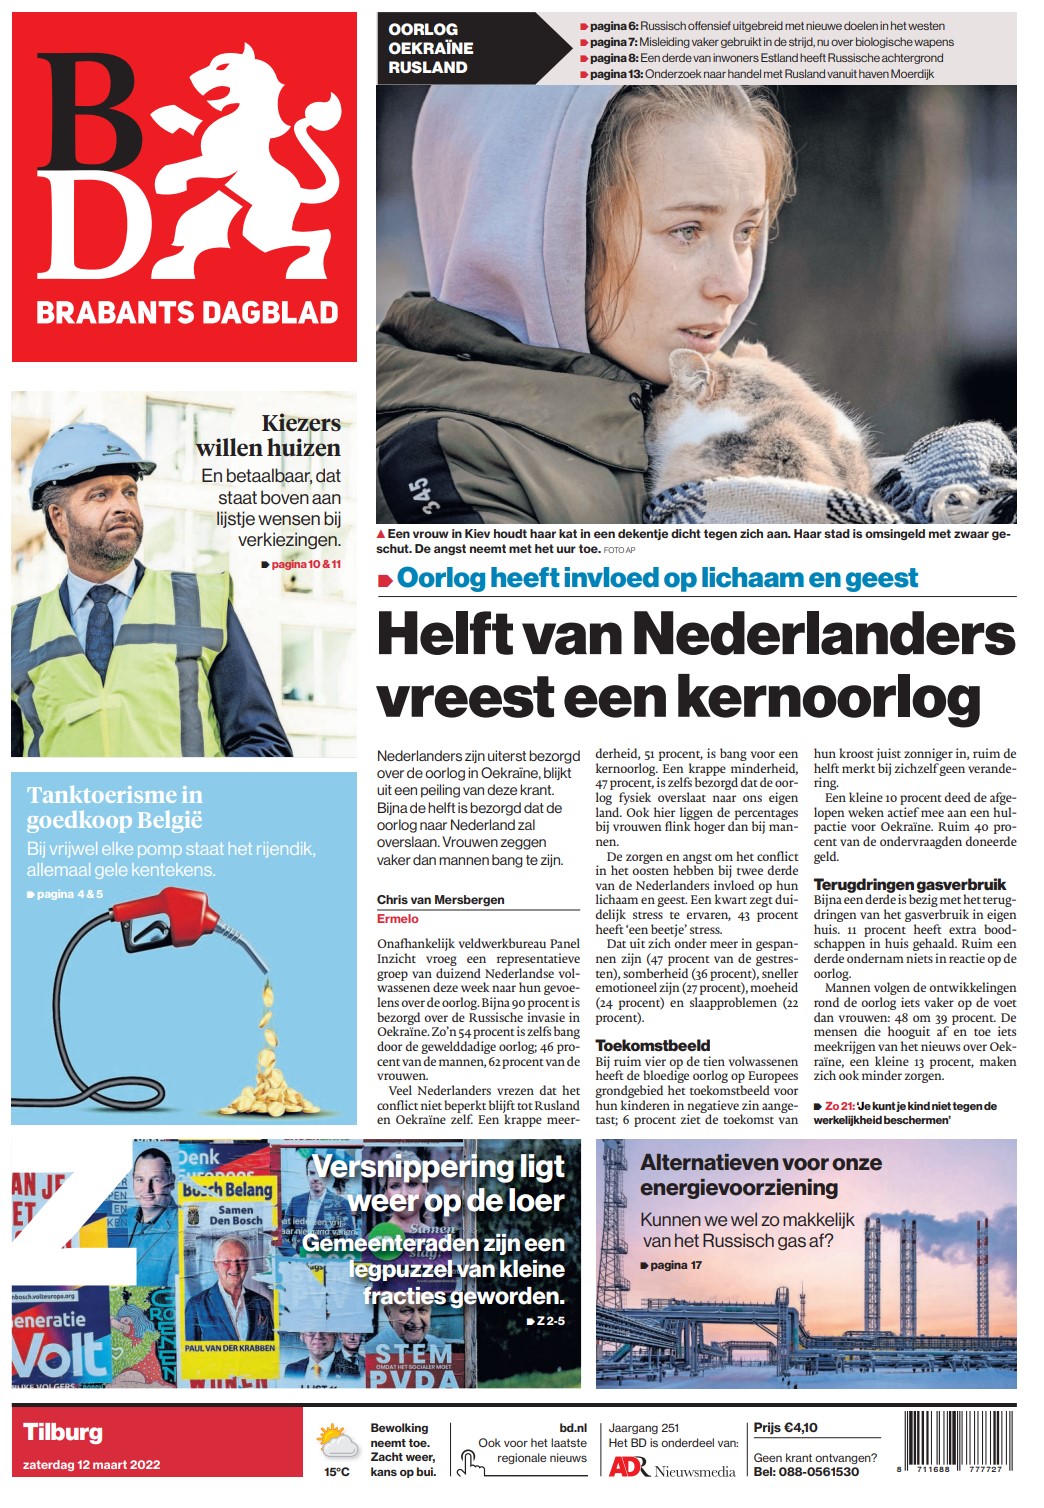 Brabants Dagblad editie Tilburg 12-03